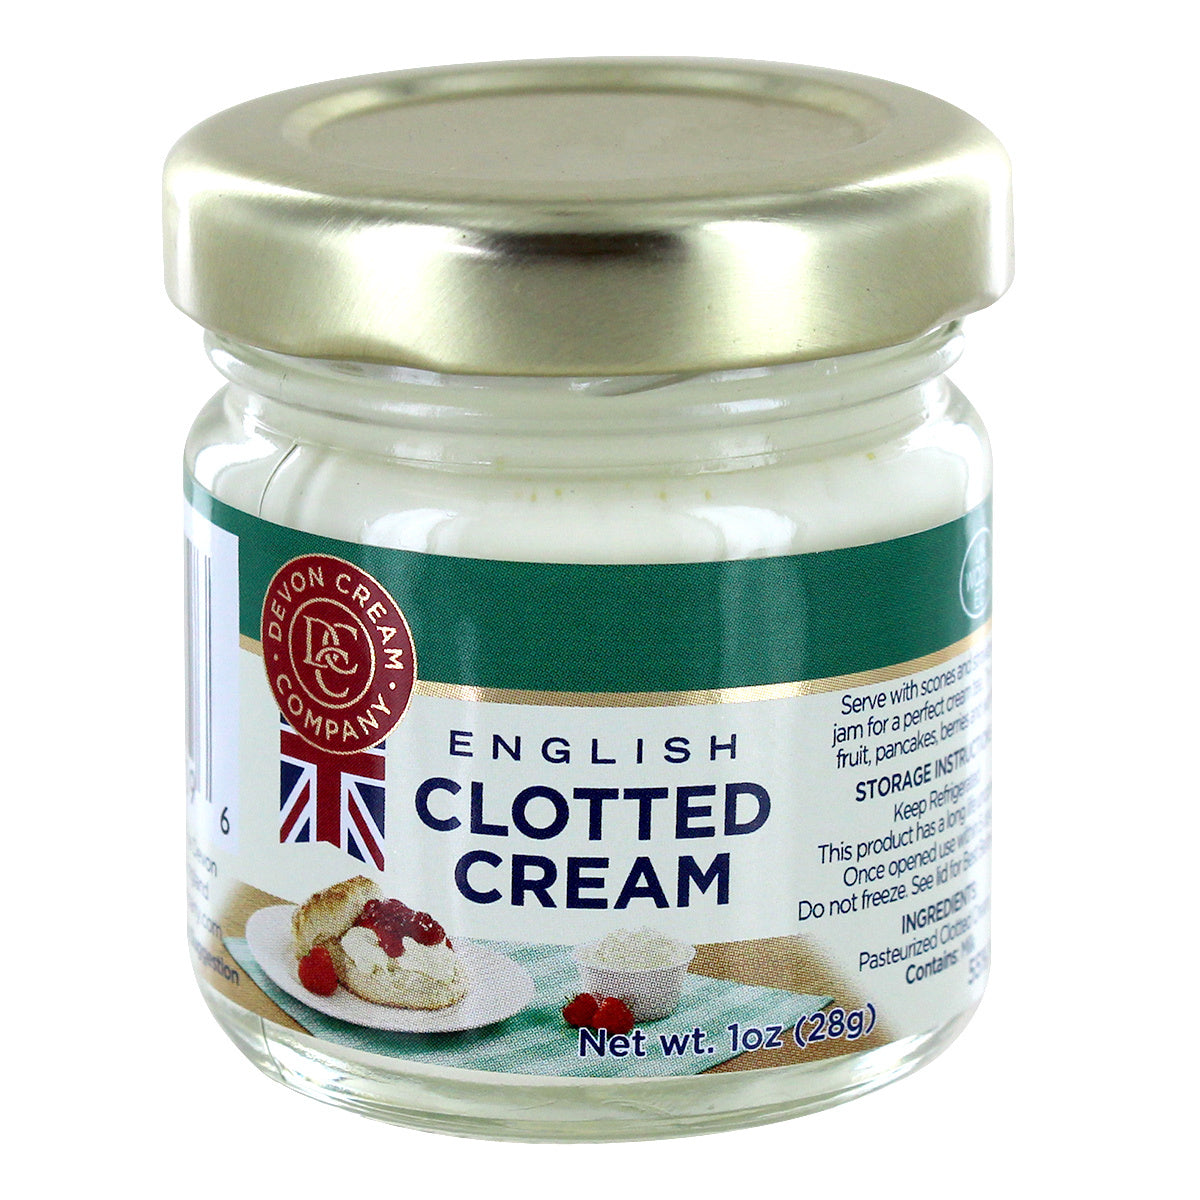 Clotted Cream - 1 oz. size